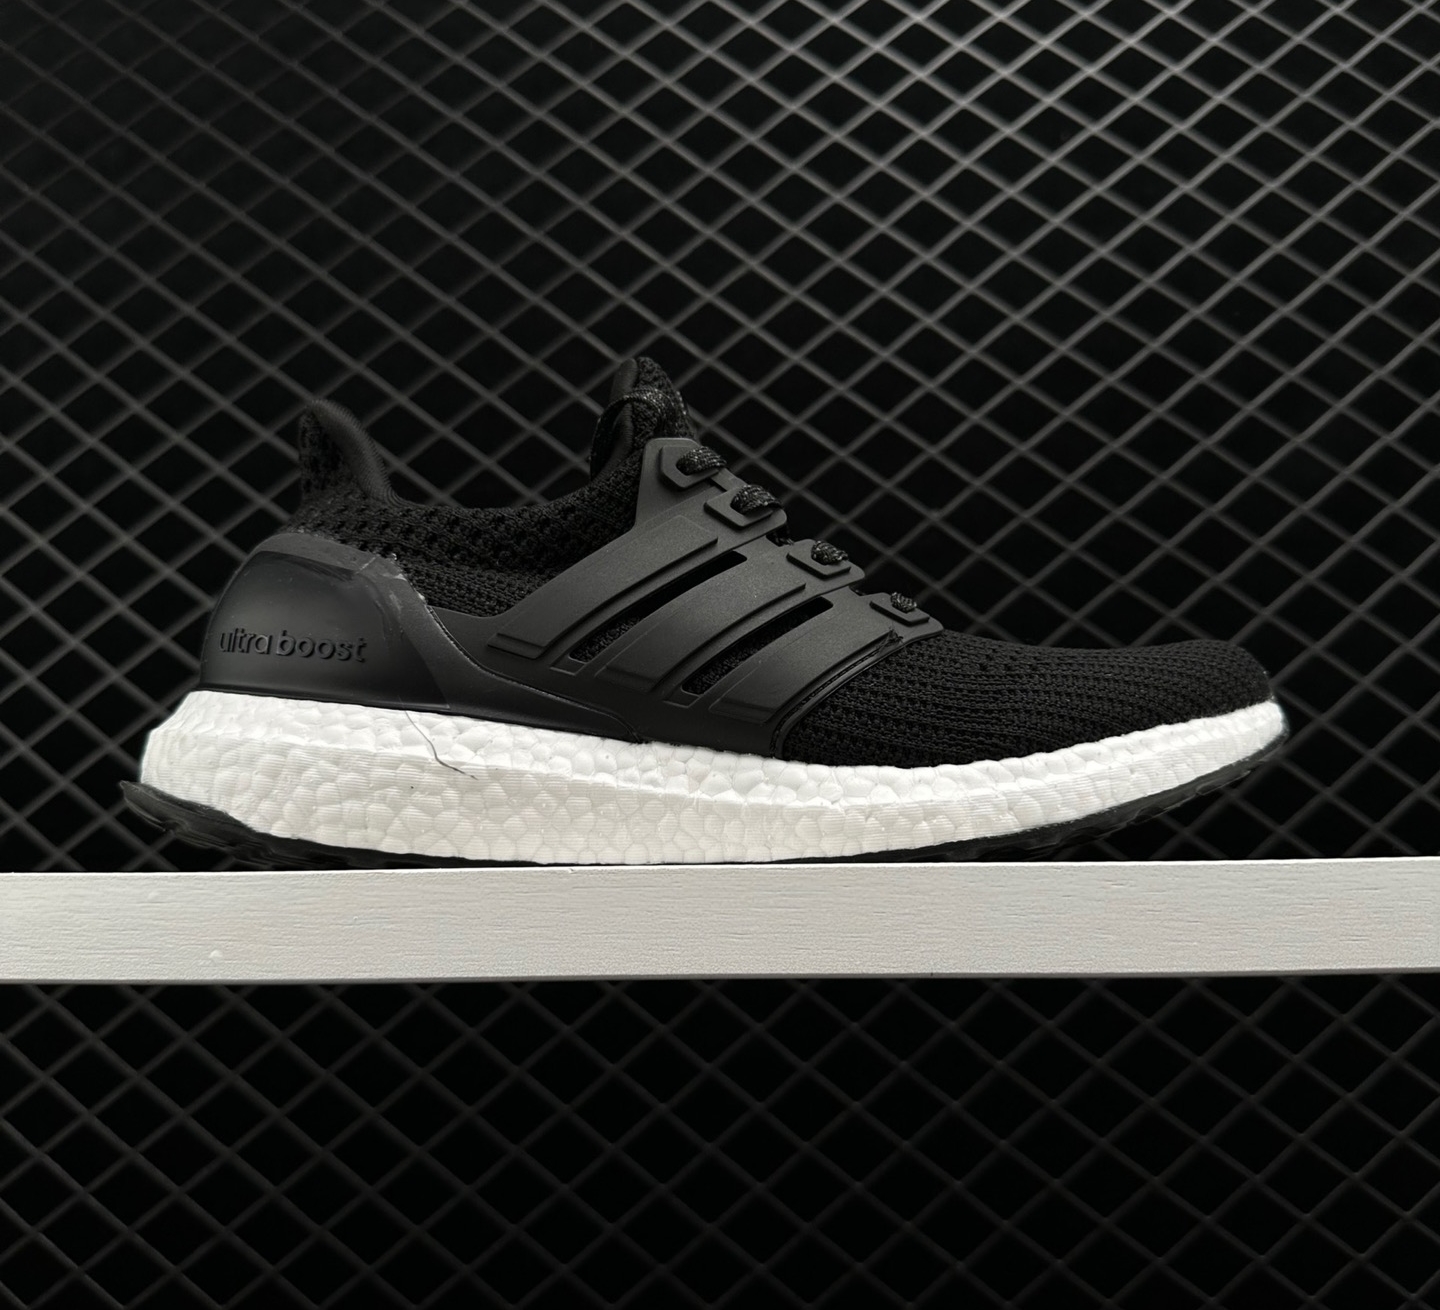 Adidas UltraBoost 4.0 DNA 'Black White' FY9123 - Premium Sneakers for Optimum Performance